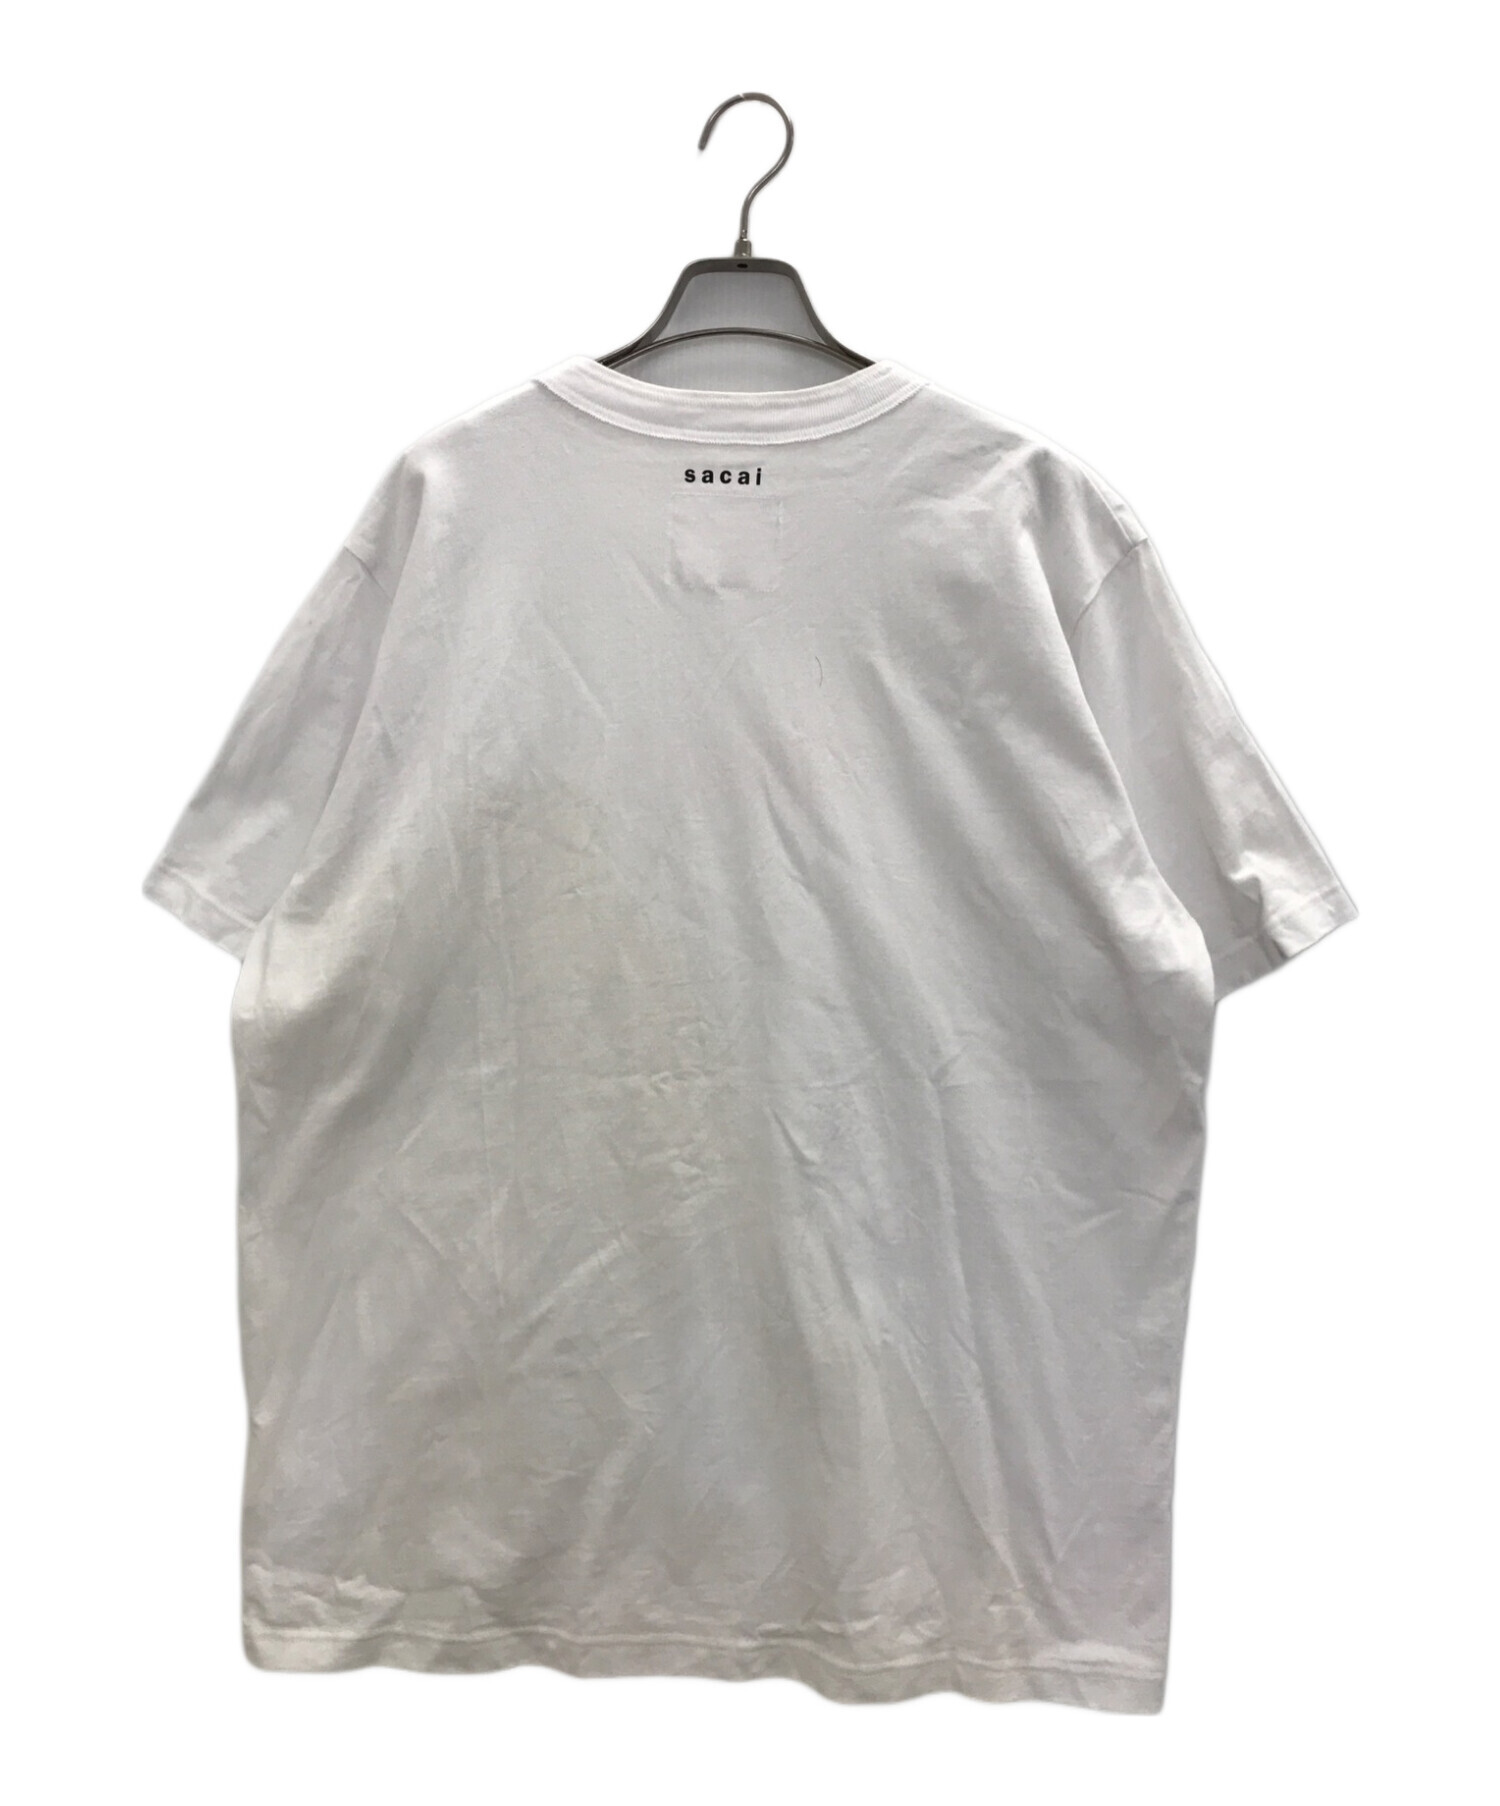 sacai (サカイ) KAWS (カウズ) フロックロゴ プリントTシャツ ホワイト サイズ:4